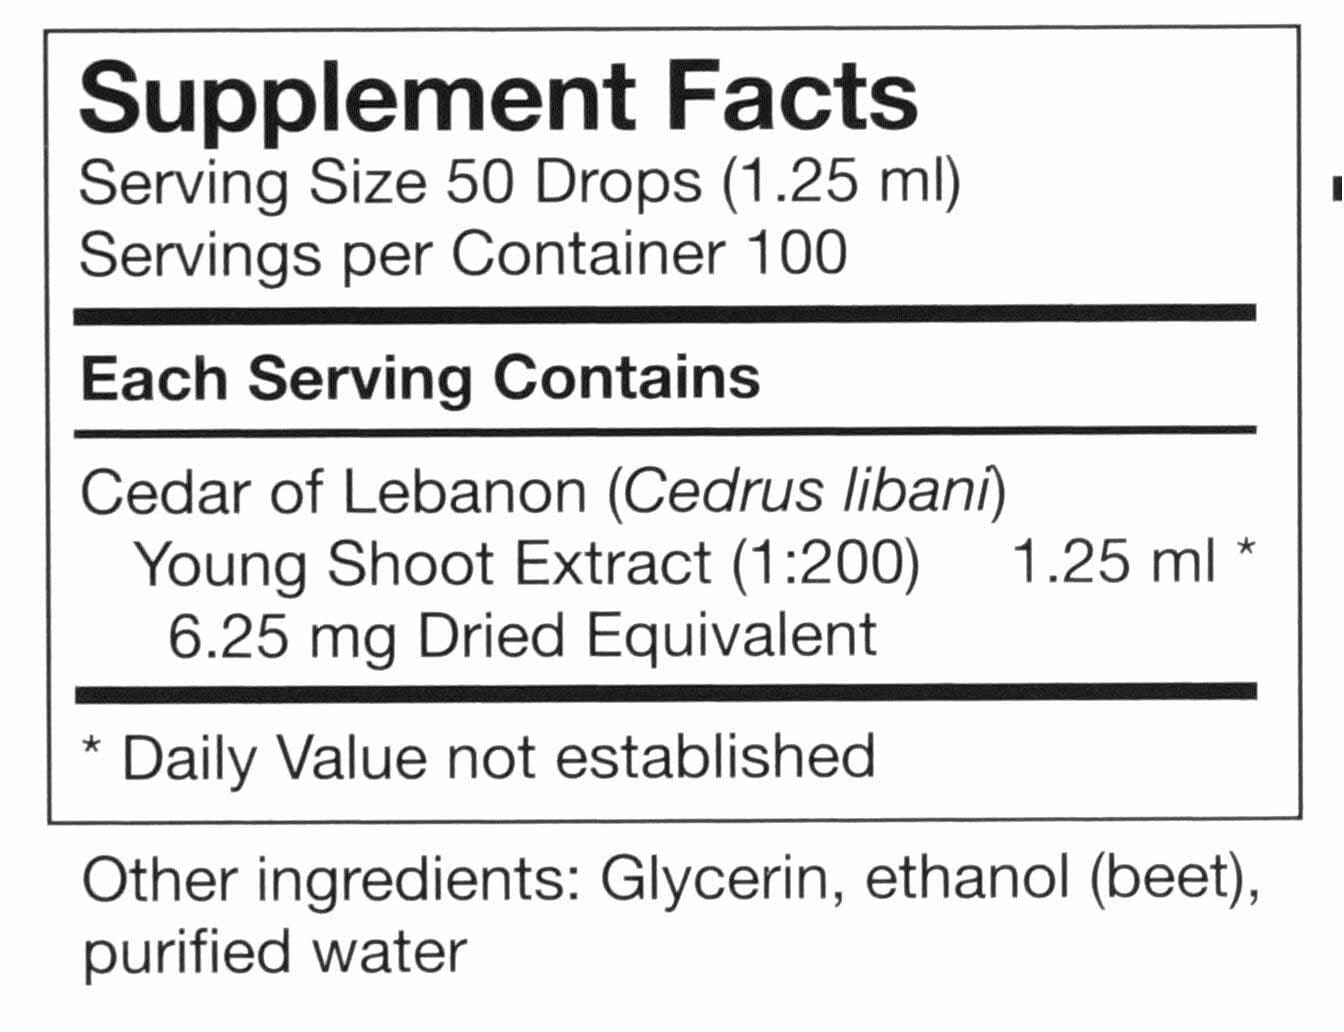 UNDA Cedrus Libani Ingredients